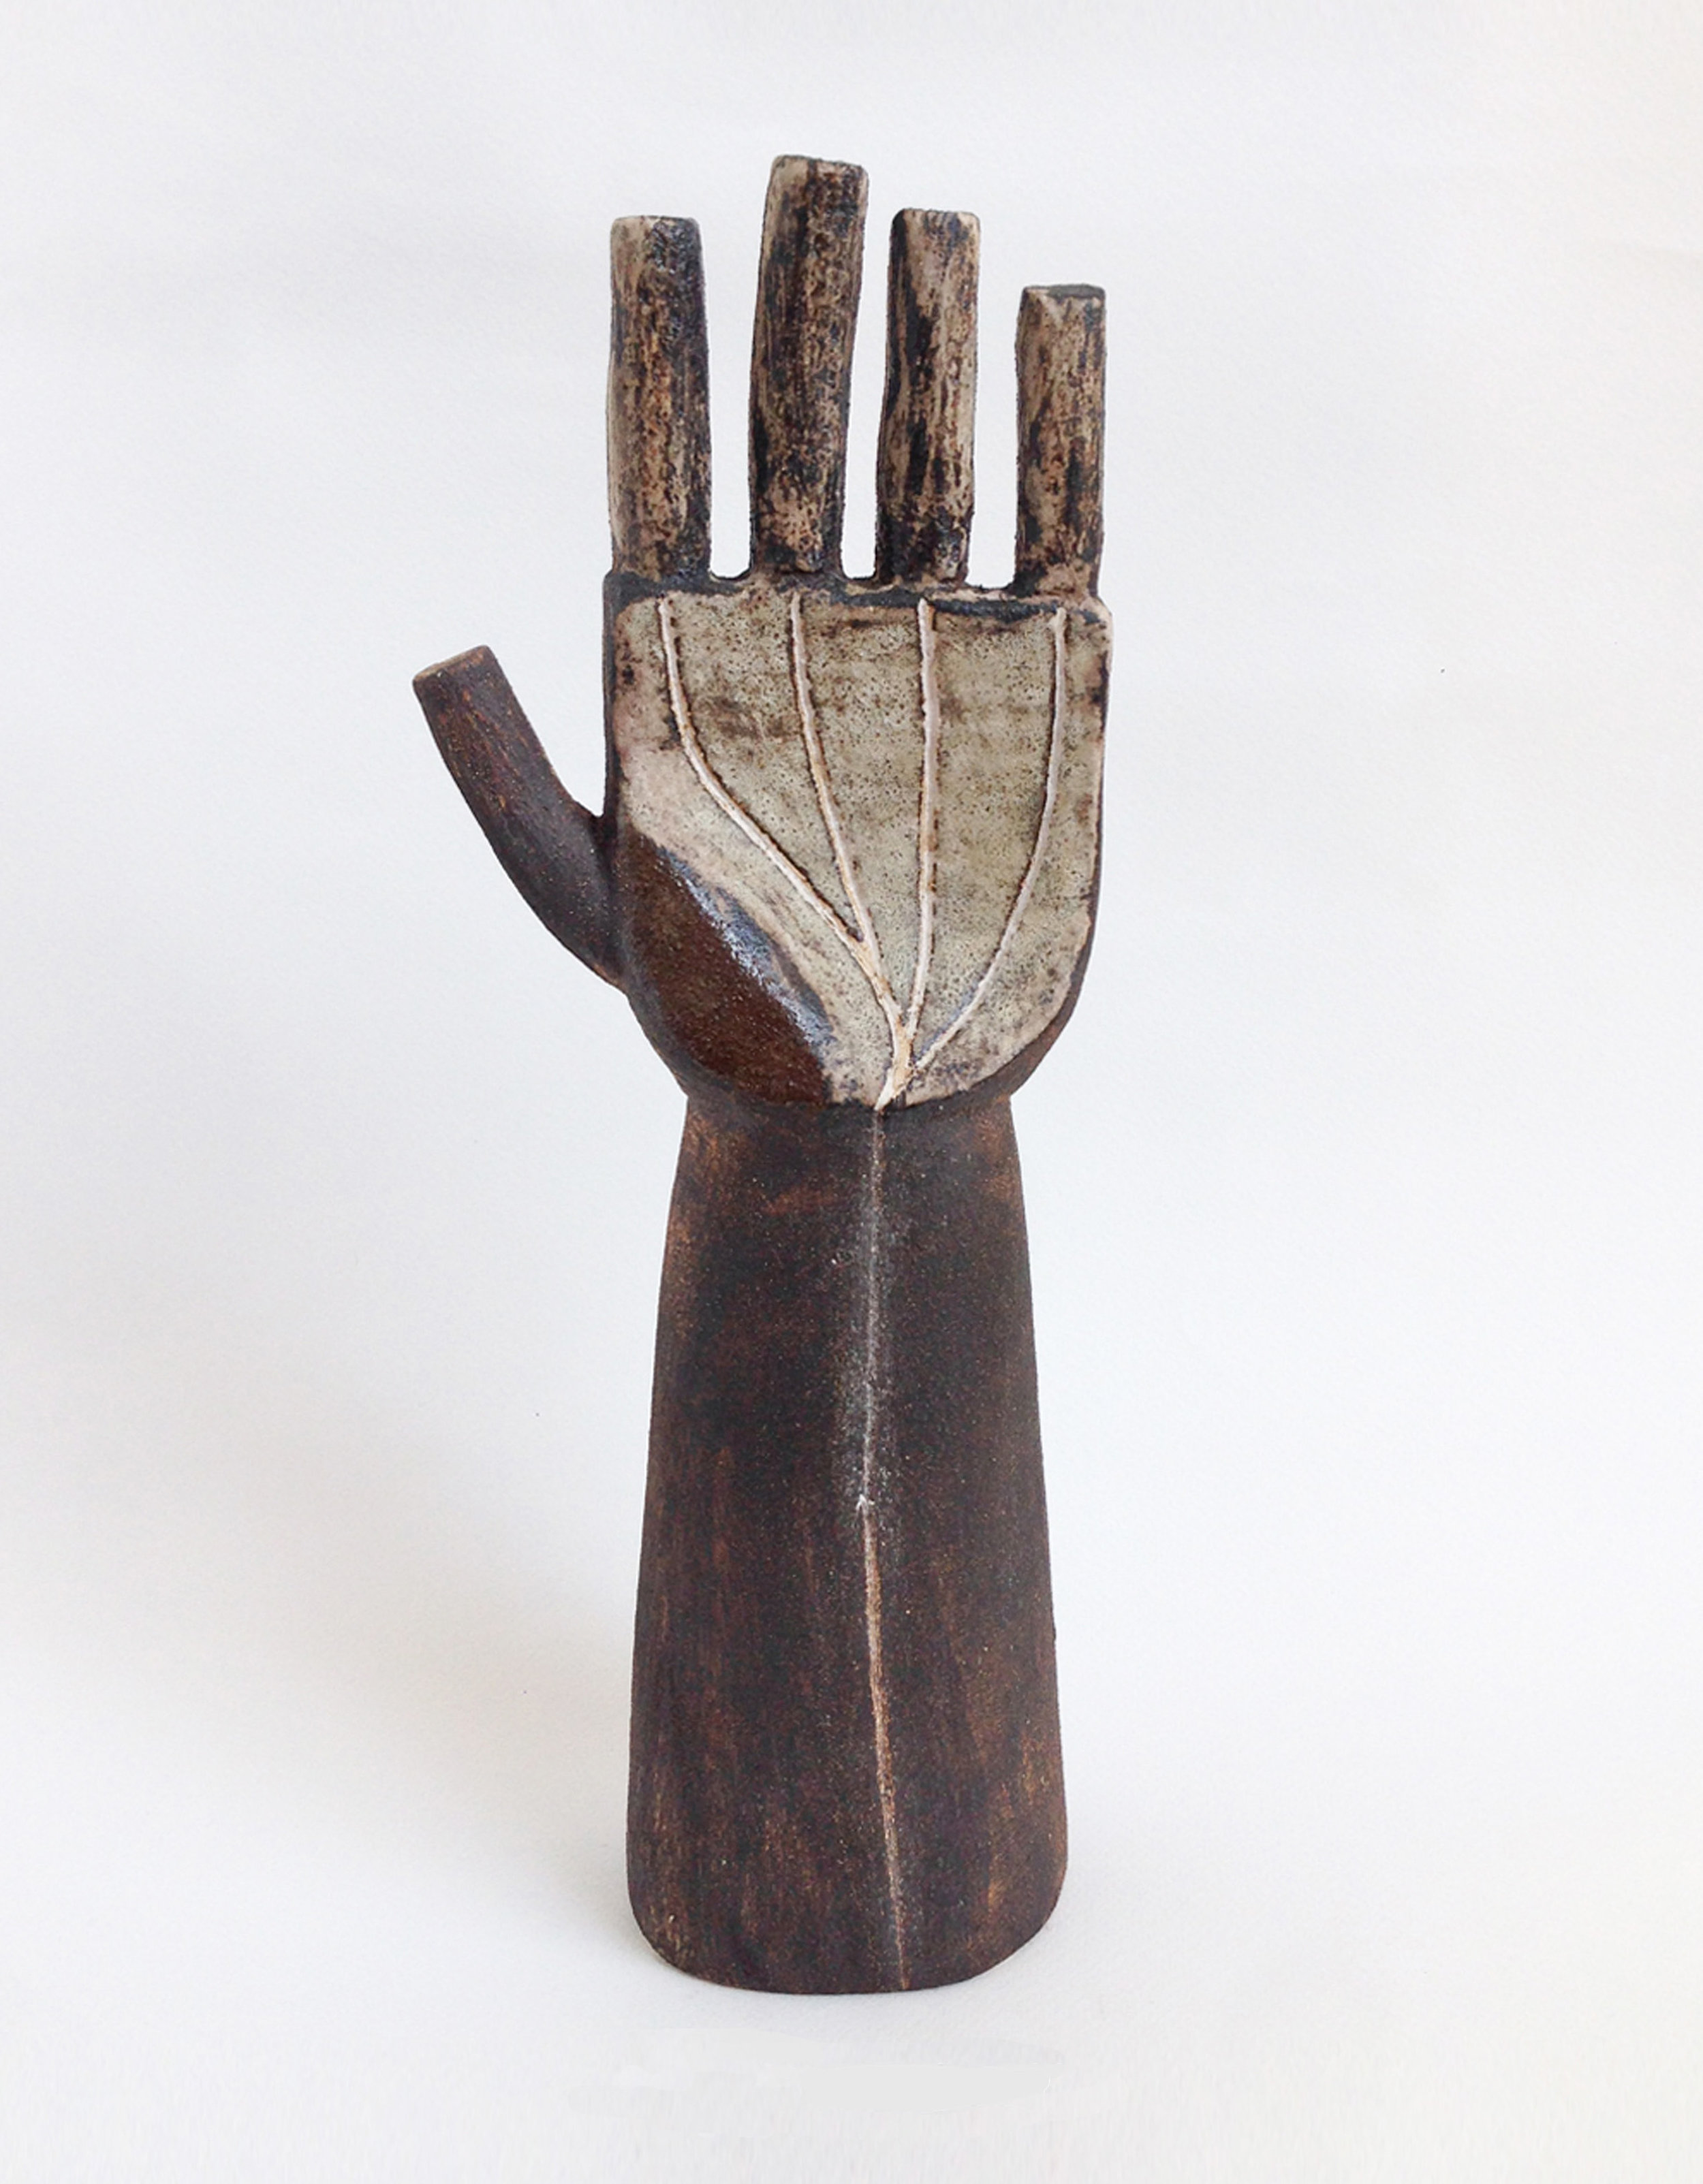  Title: Delta Hand Size: H 26 x W 12 x D 8 cm Medium: Stoneware Ceramic 